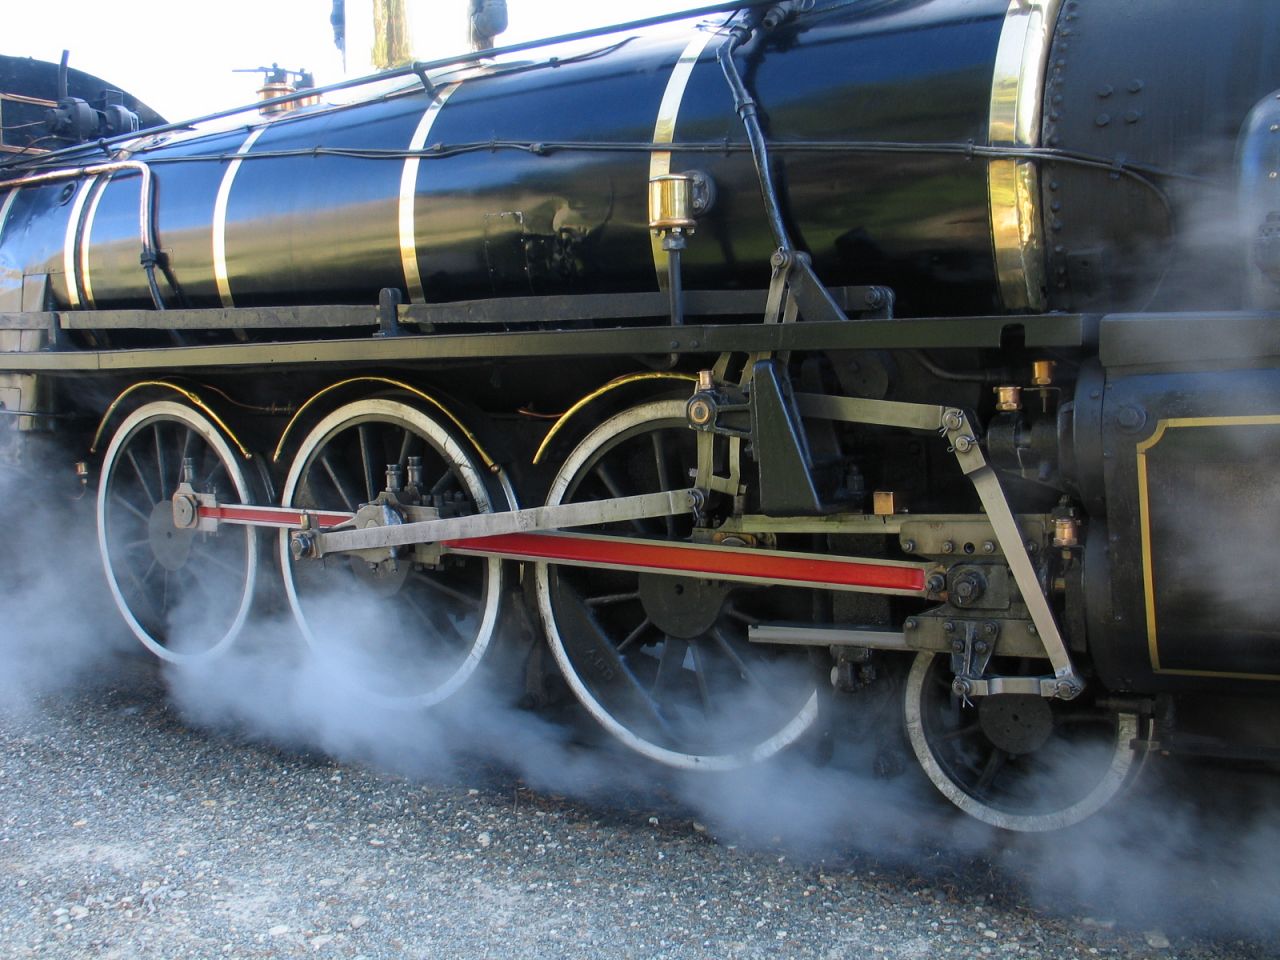 fotka / image Fairlight - historicky (rychlo)vlak, New Zealand